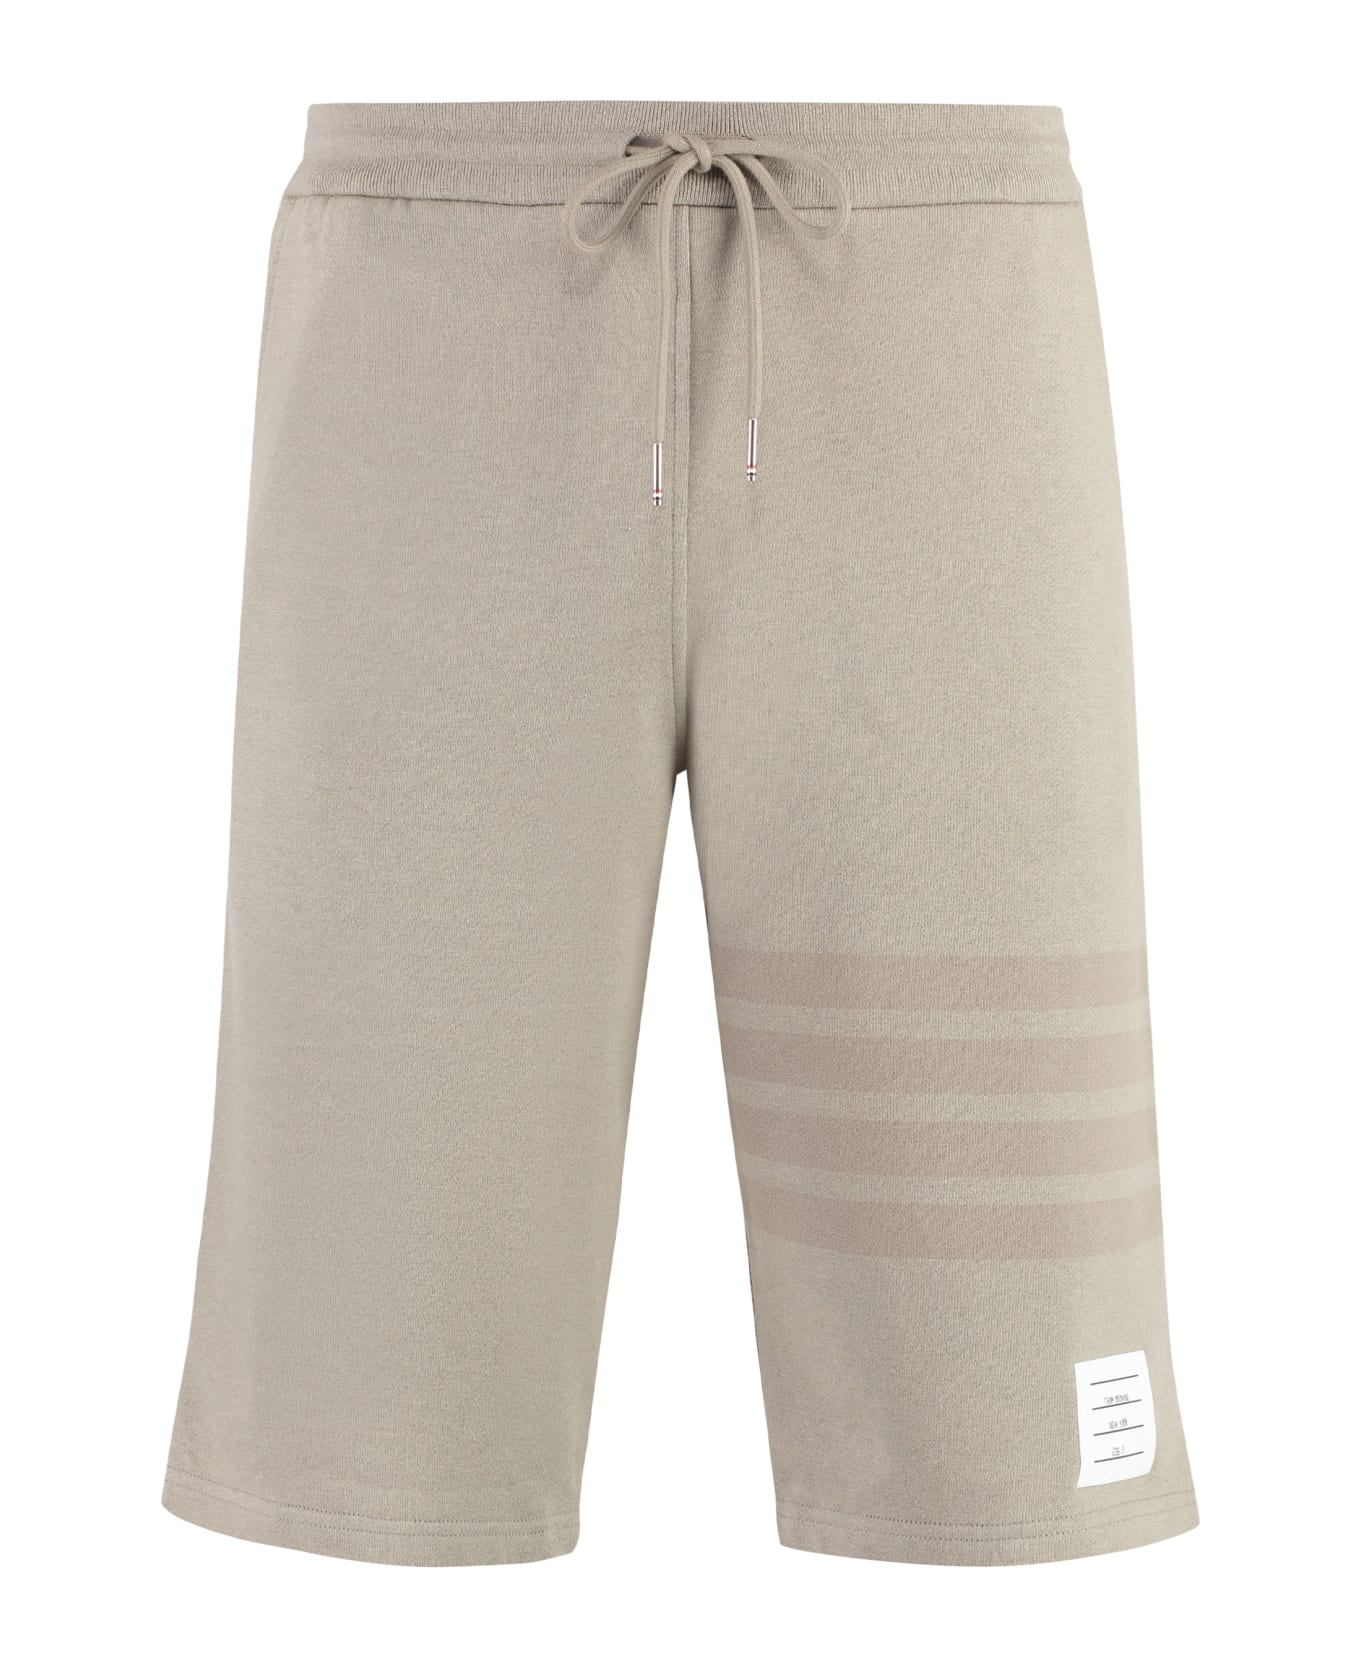 Thom Browne Cotton Shorts - Beige